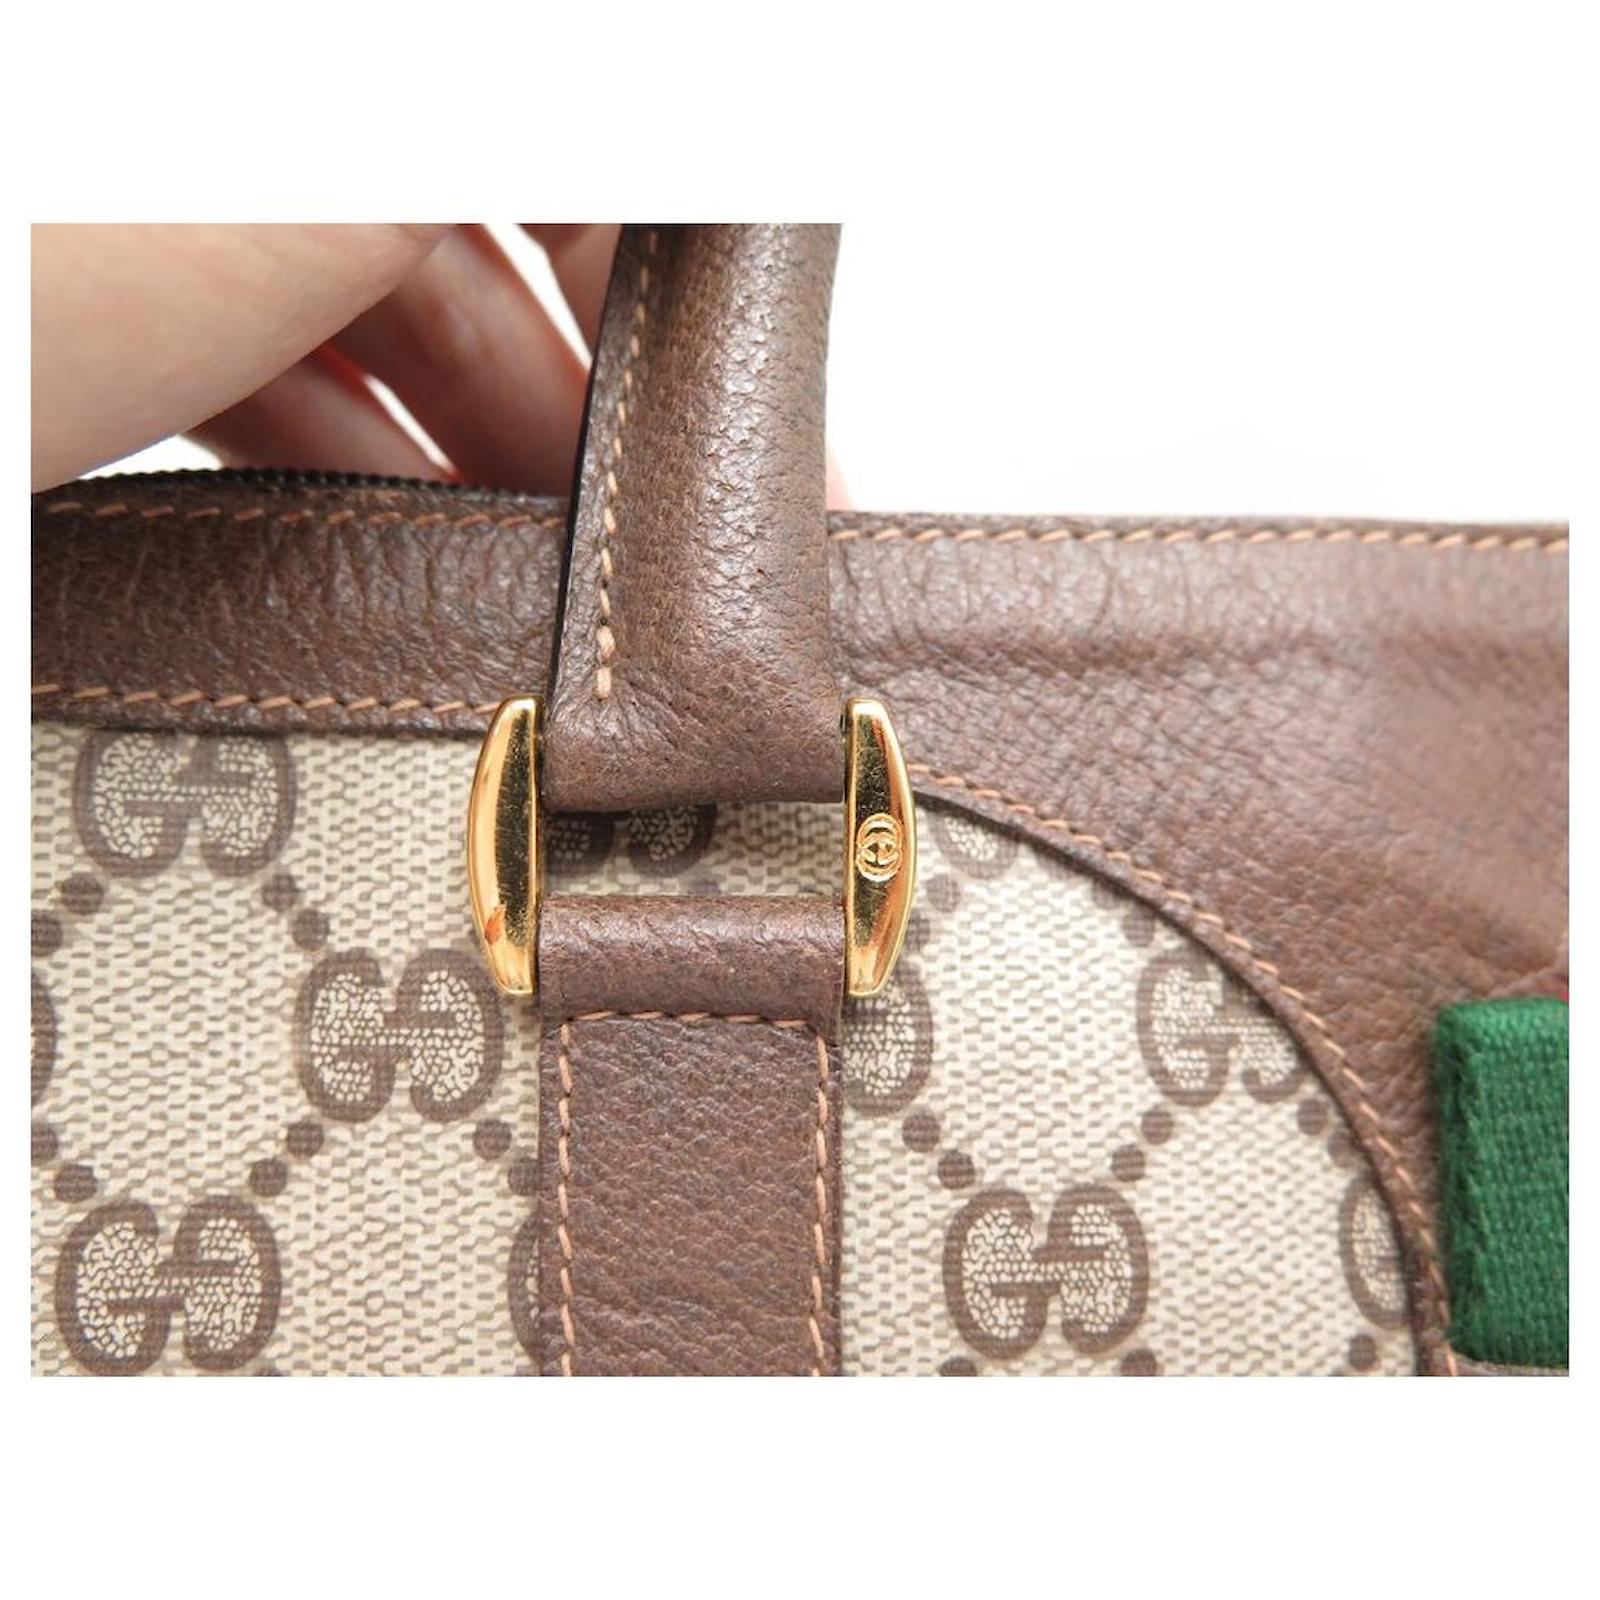 Gucci Boston Handbag 370932